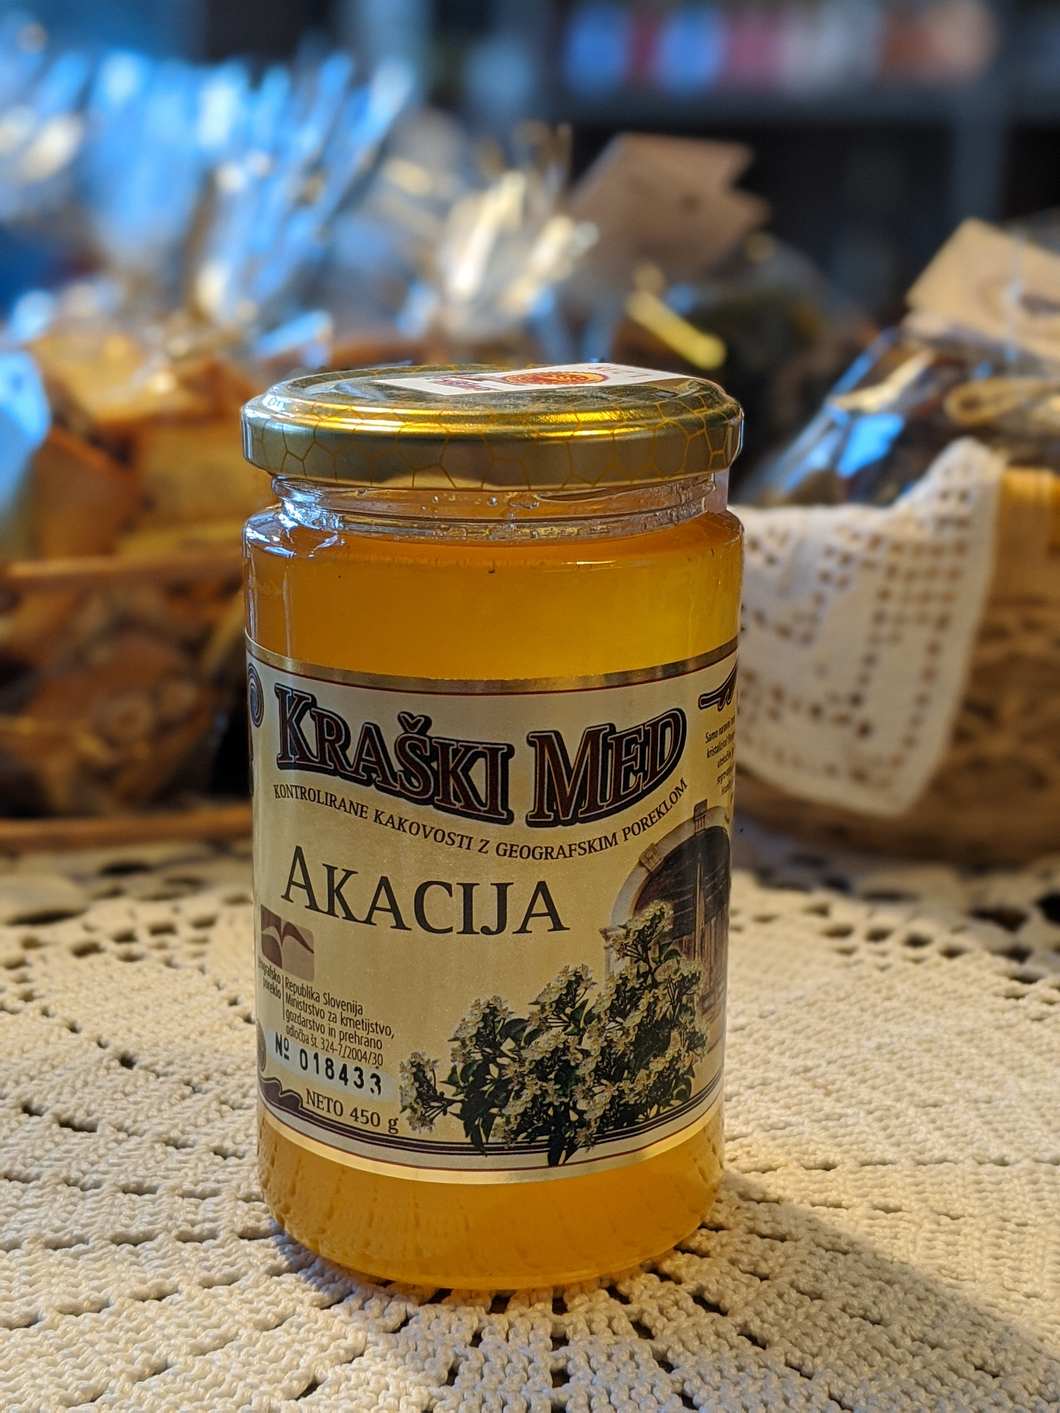 Karst honey acacia 900g, 450g, 250g-protected designation of origin